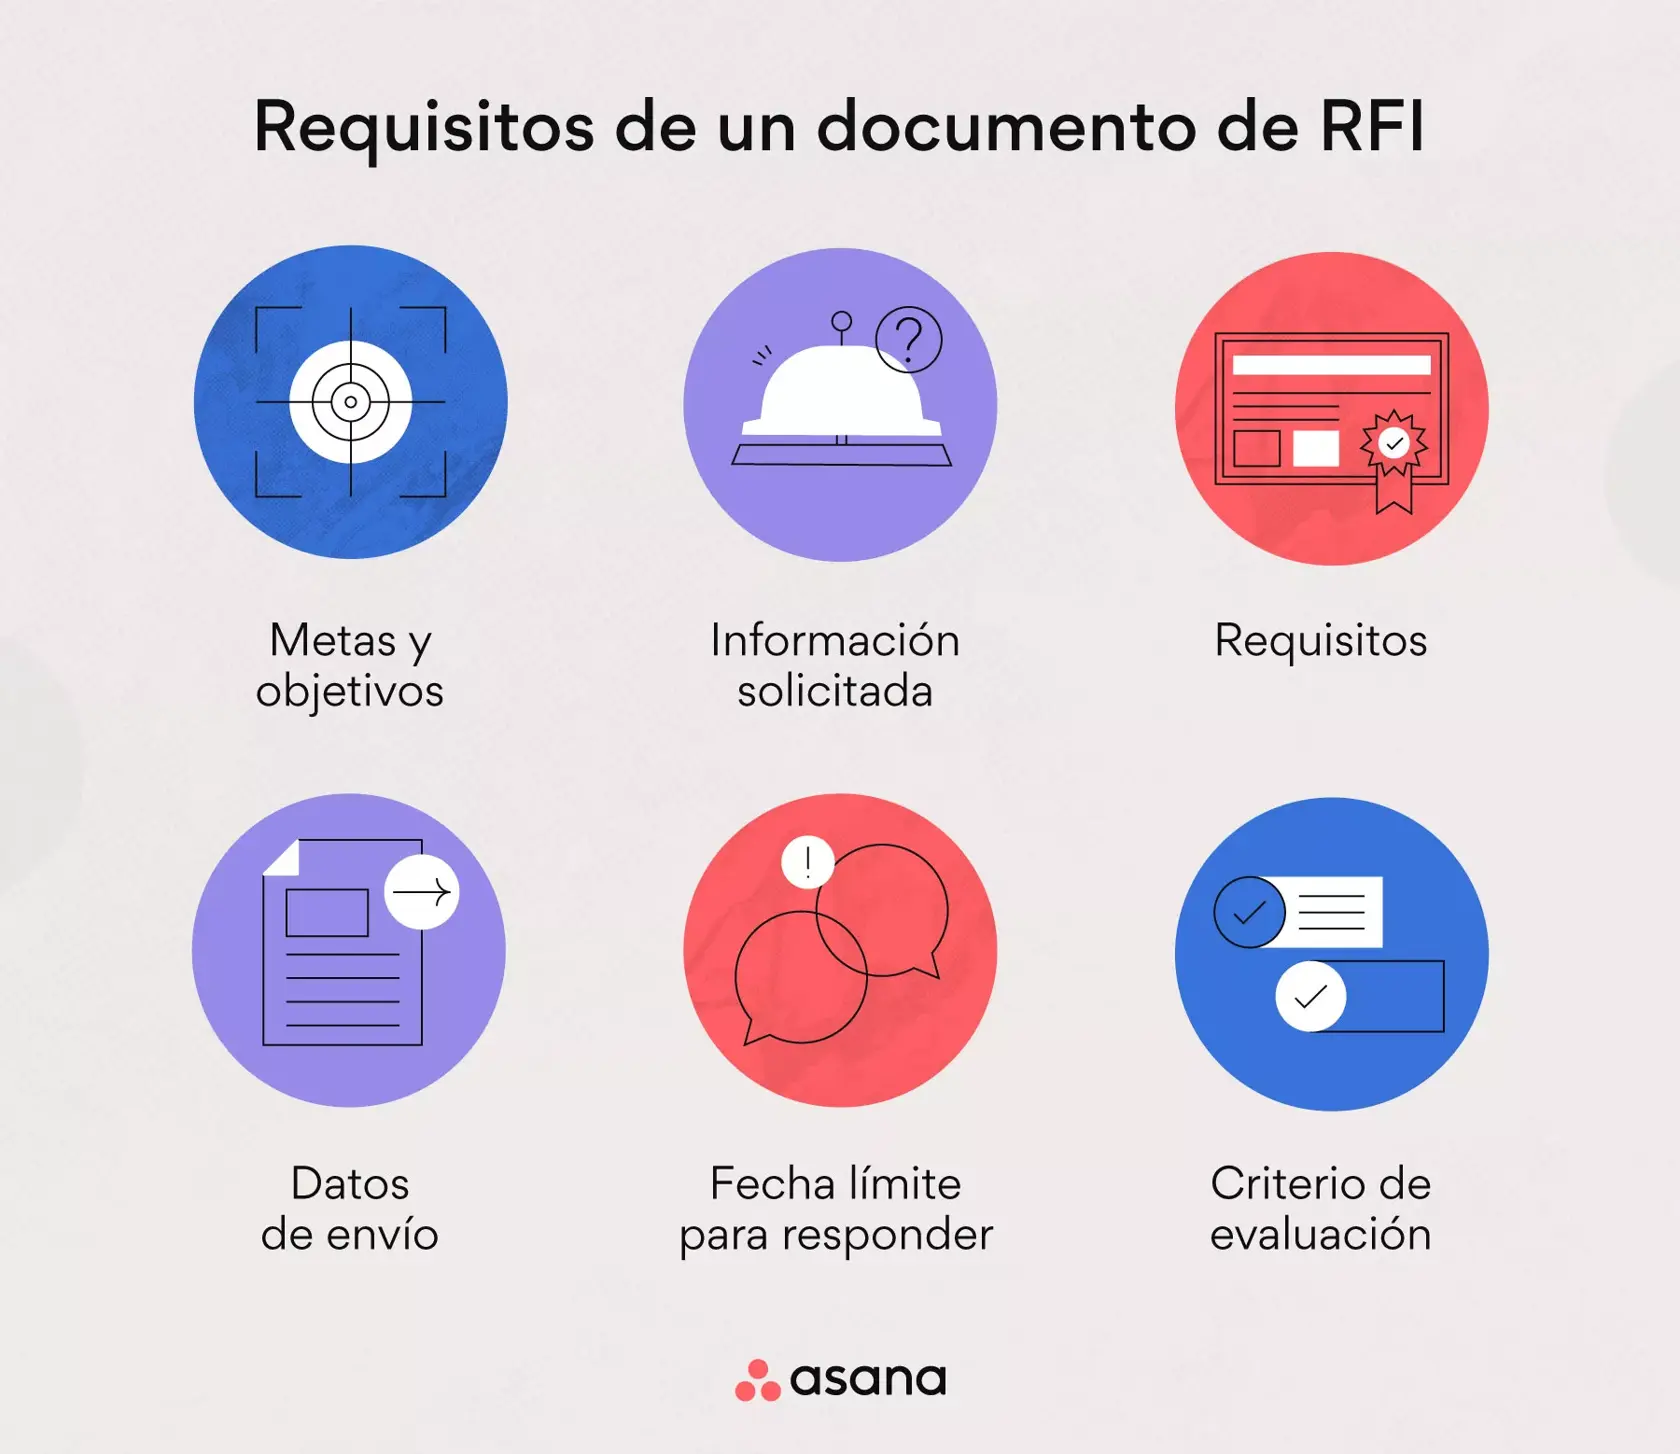 Requisitos de un documento de RFI